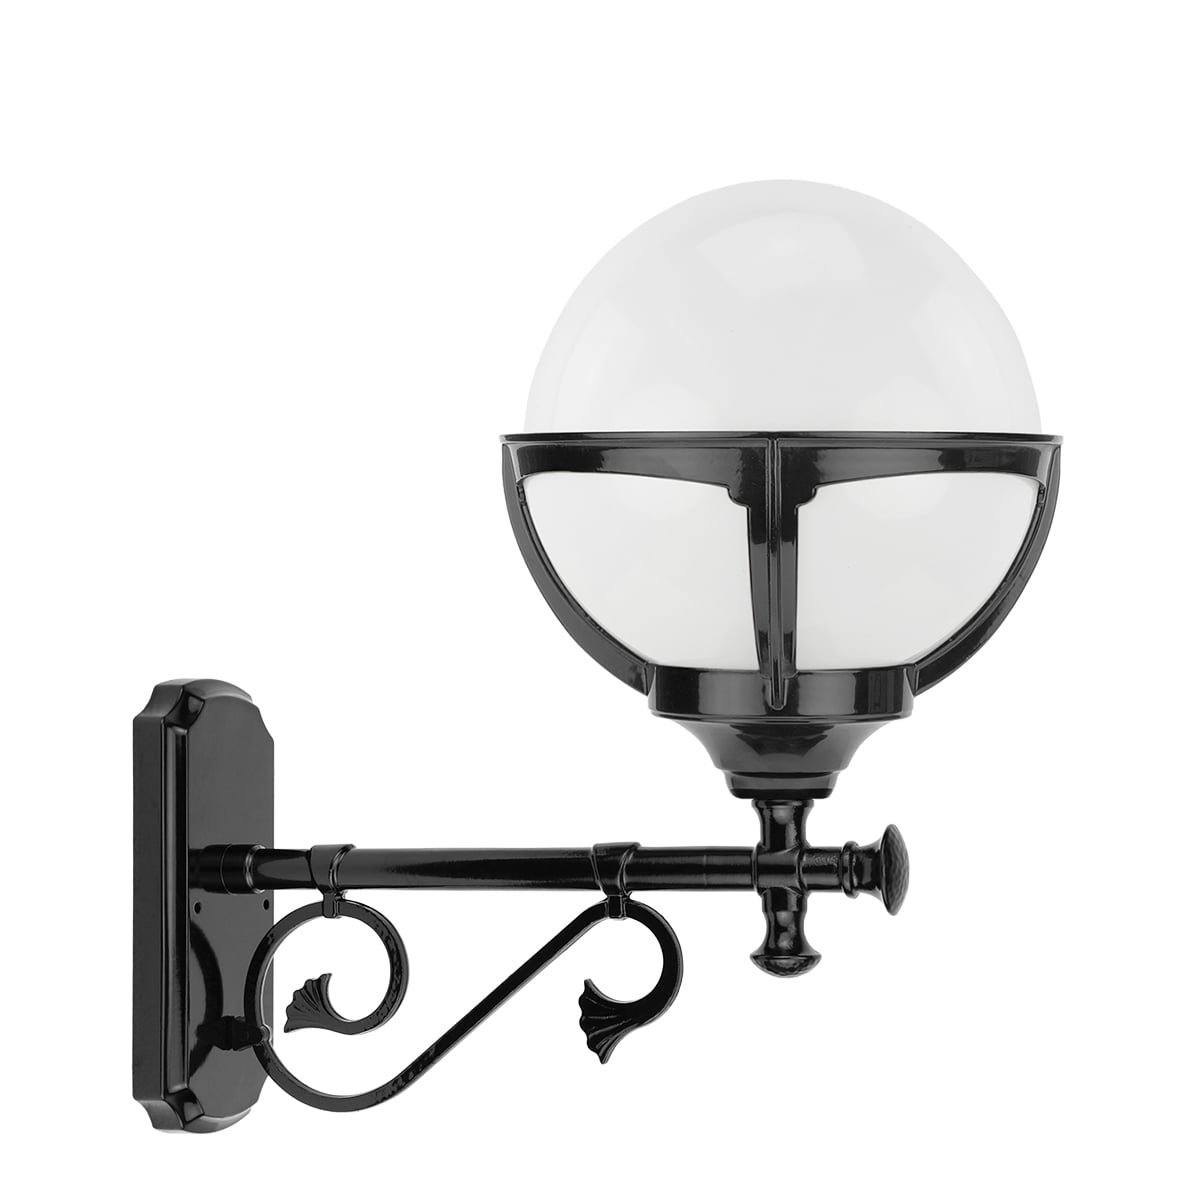 Lamp home door white globe Barnflair - 48 cm